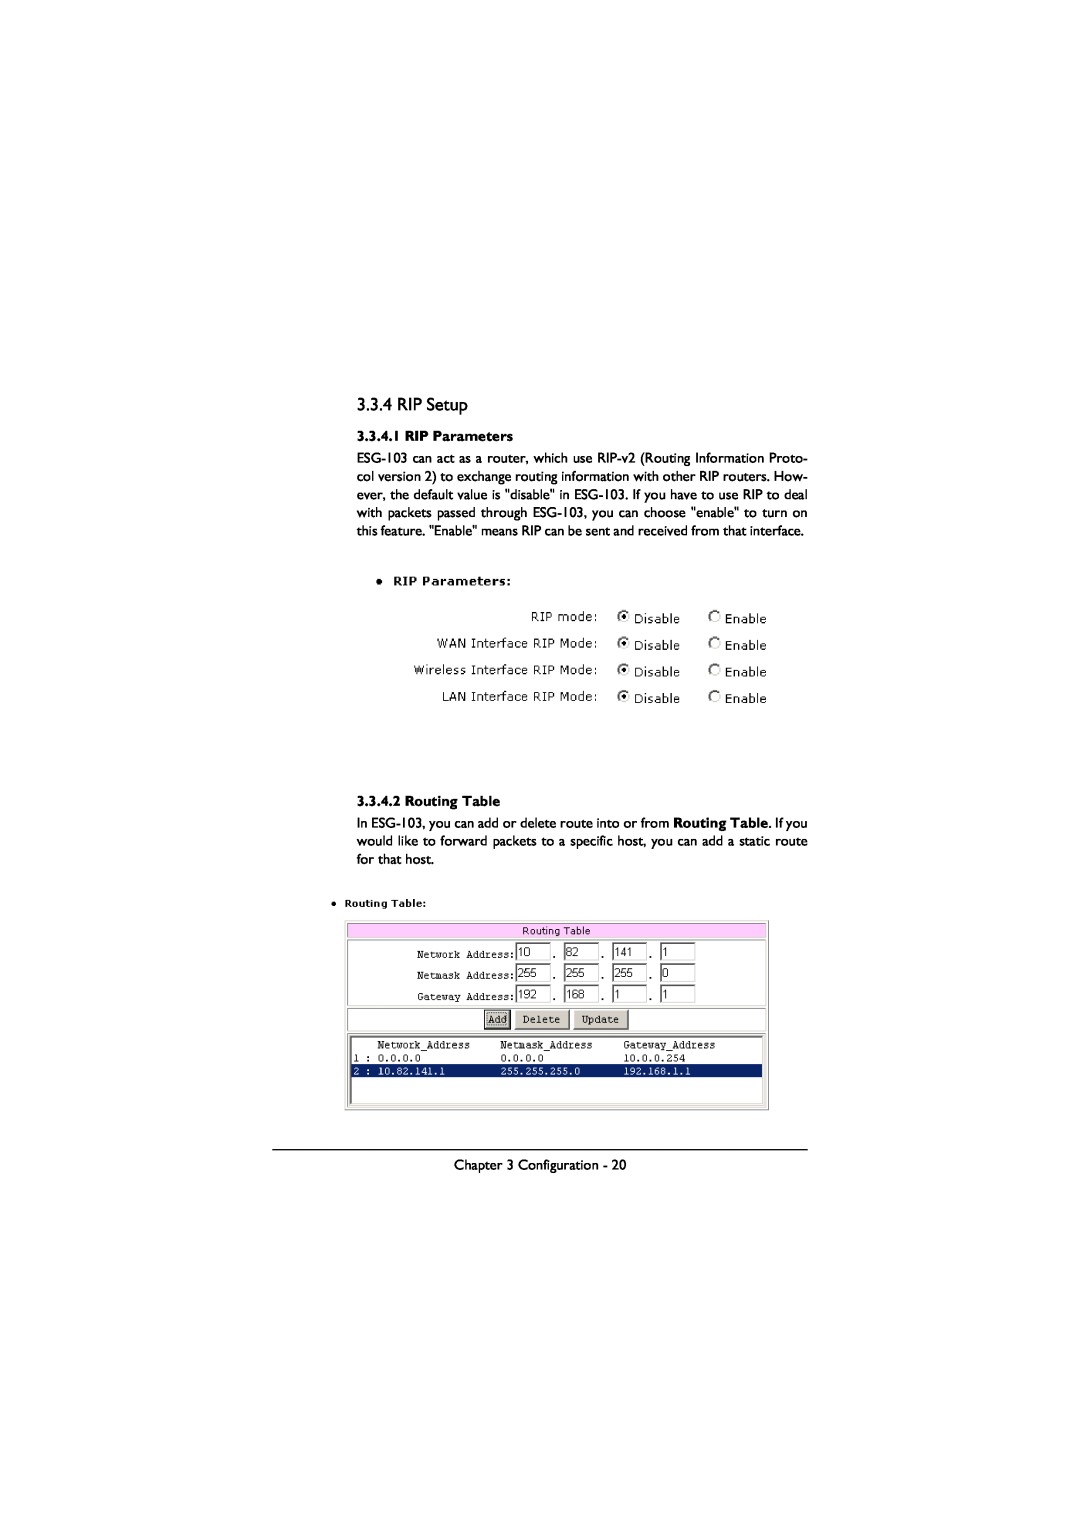 BenQ ESG-103 manual RIP Setup, RIP Parameters, Routing Table 